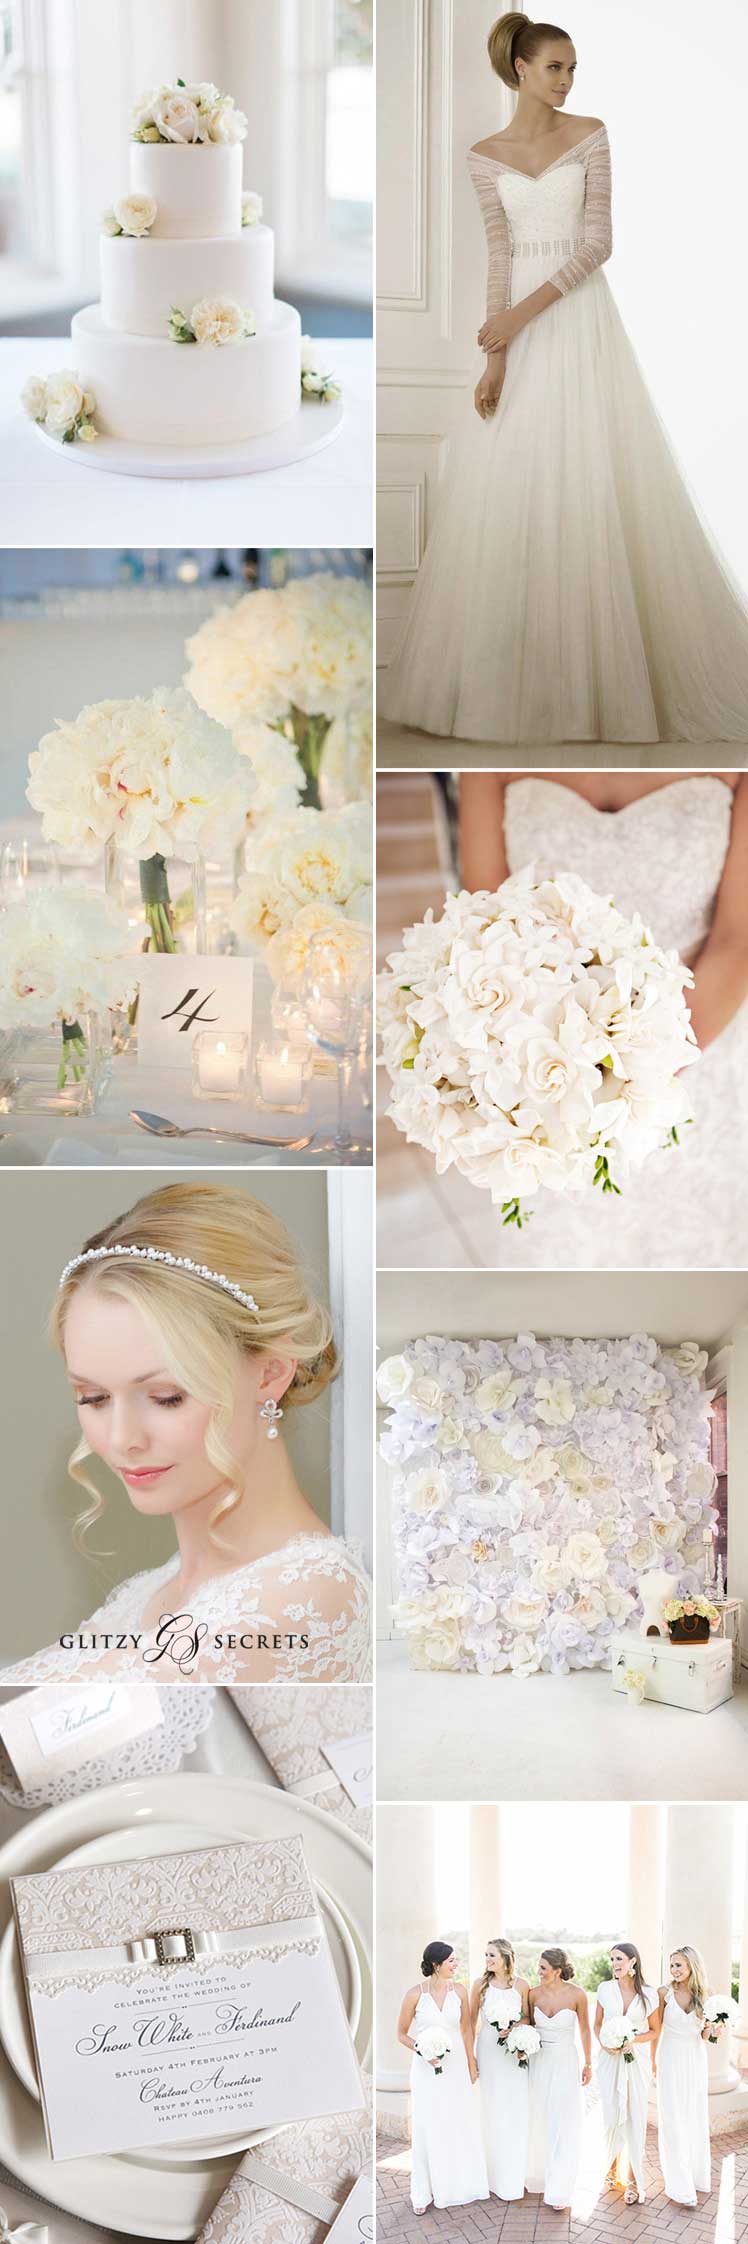 Beautiful white wedding ideas